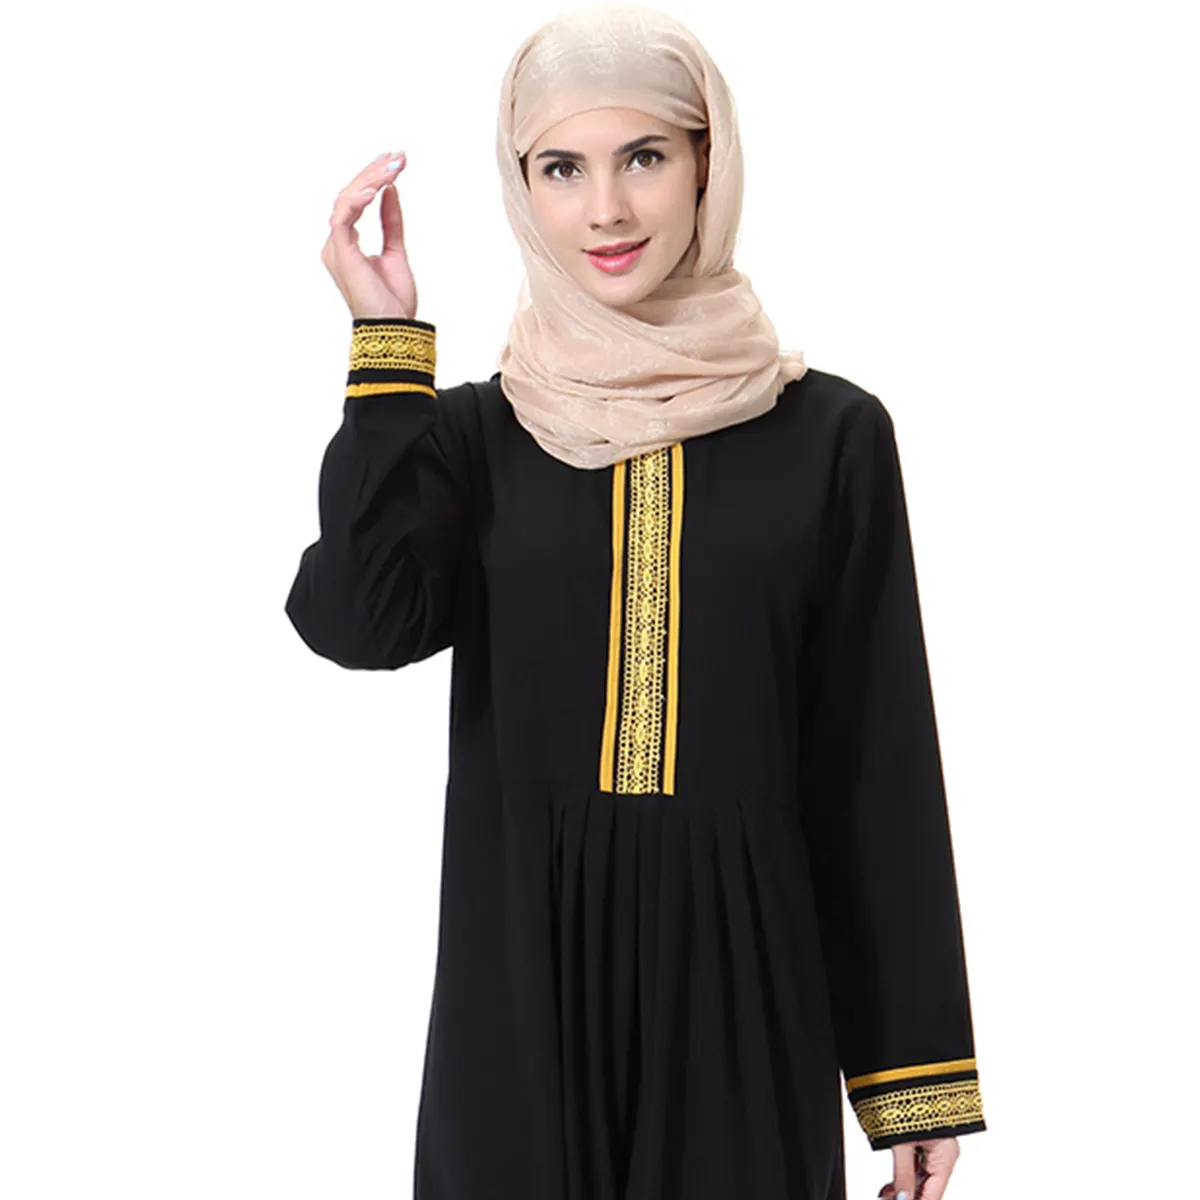 Großhandel Kleidung Nida Stoff Truthahn Istanbul Dubai Islamische Abaya Kleidung Muslim Kleid setzt islamische moderne Abaya Großhandel